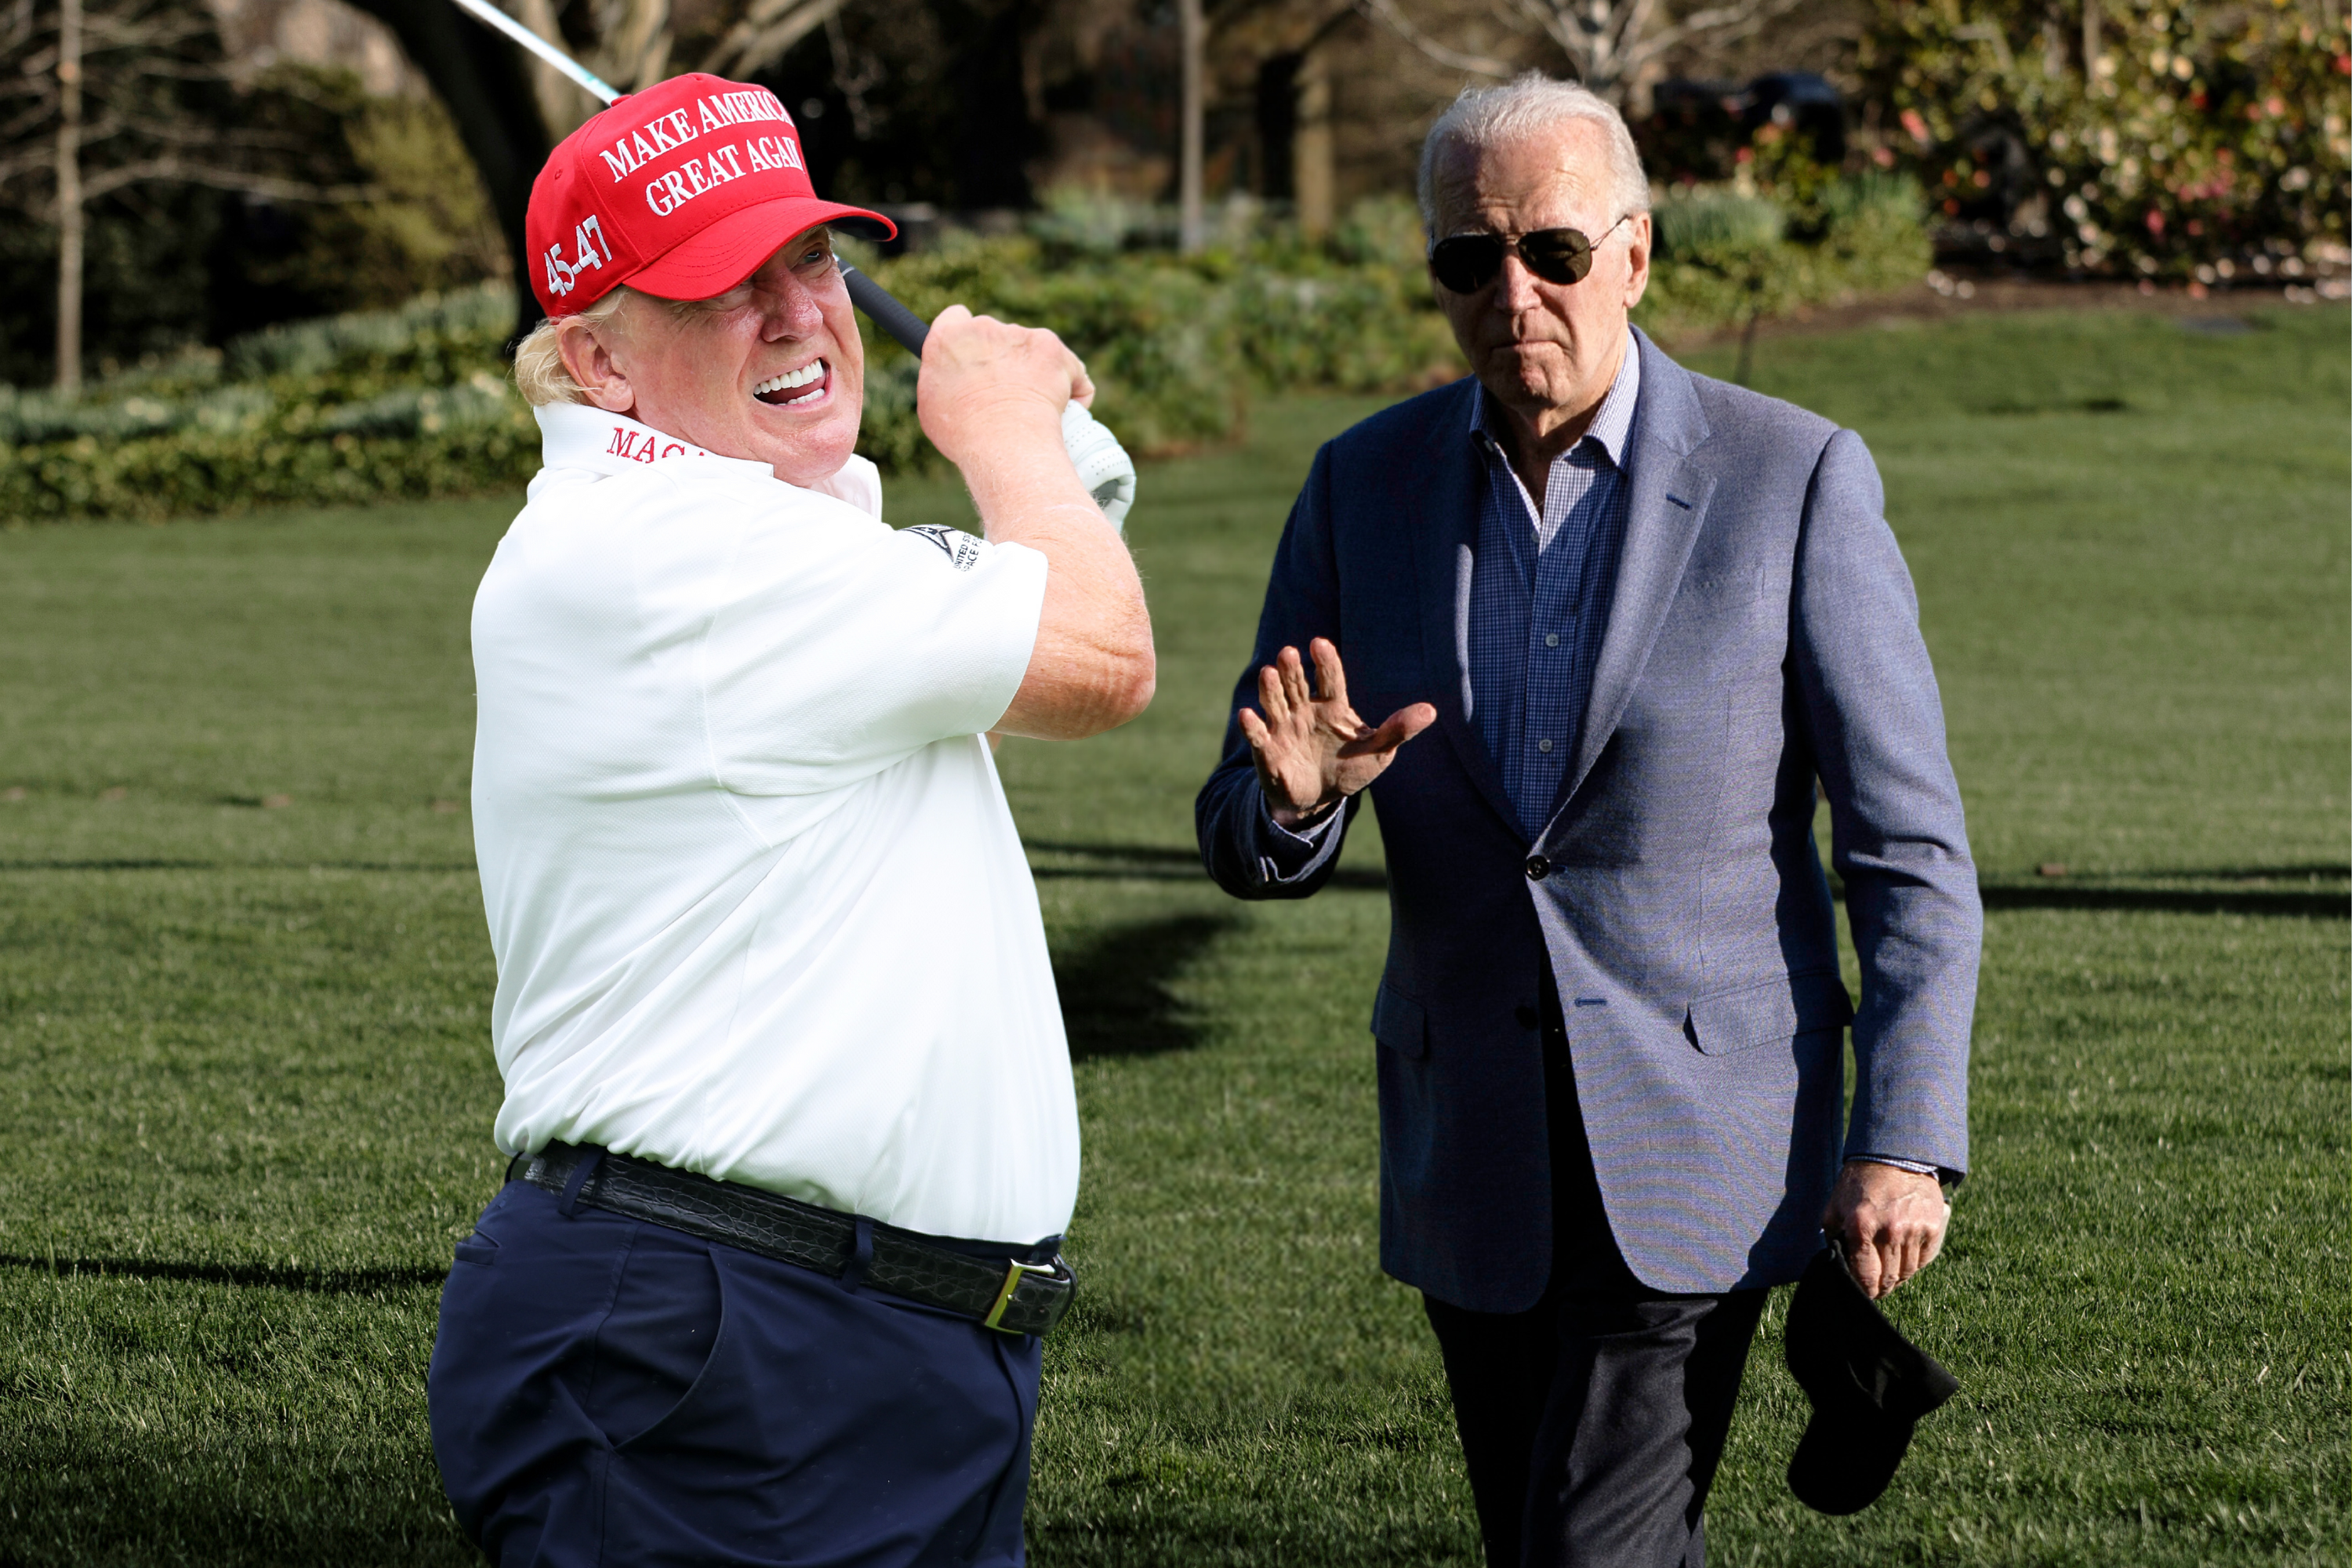 Joe Biden's Golf Skills Compared to Donald Trump's